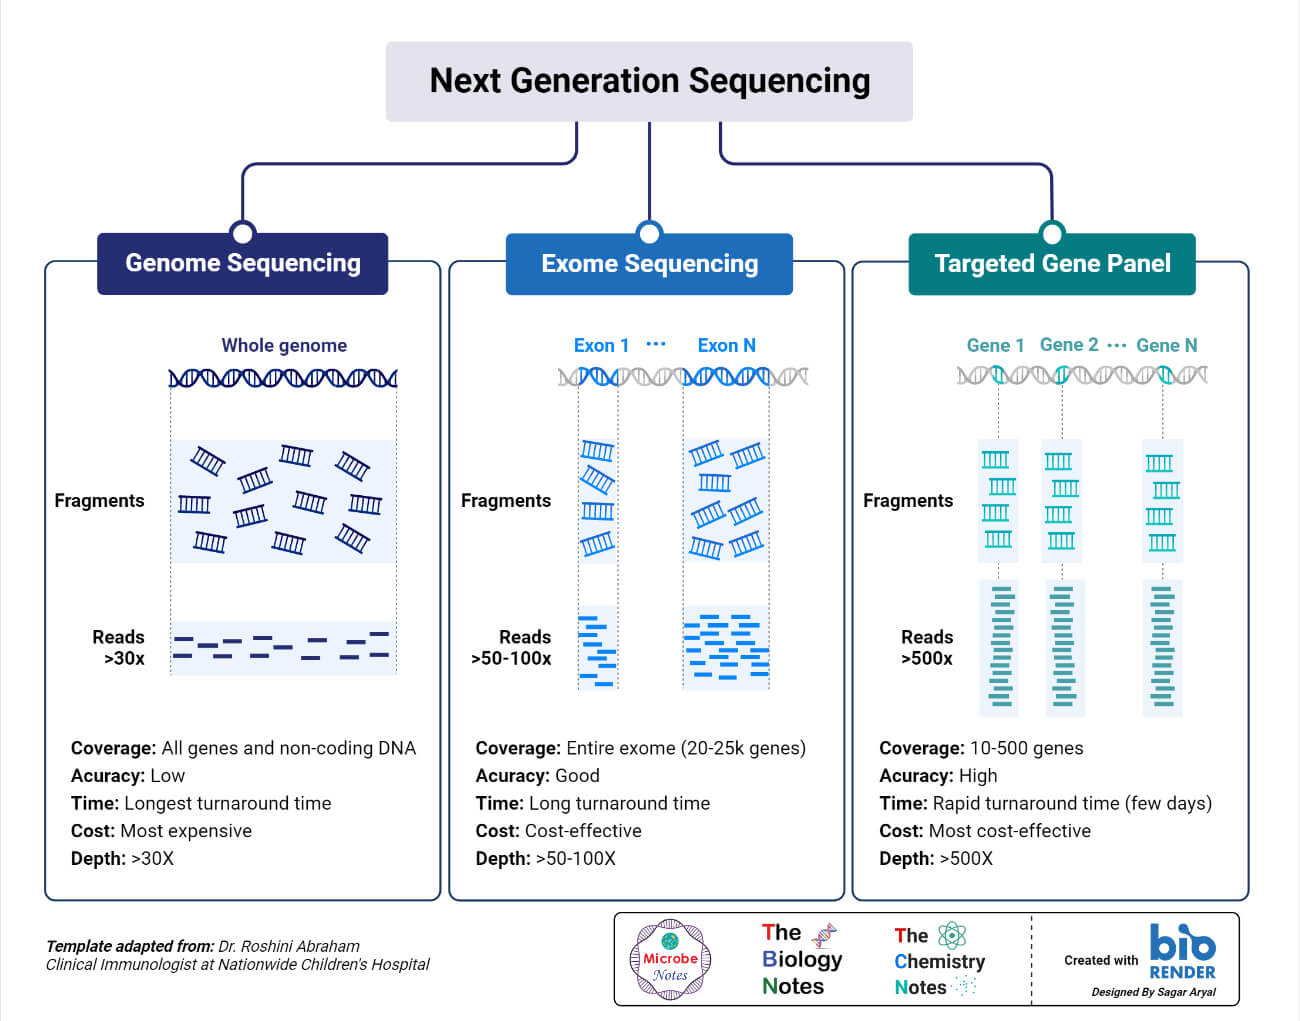 Comparison of Next Generation Sequencing Techniques